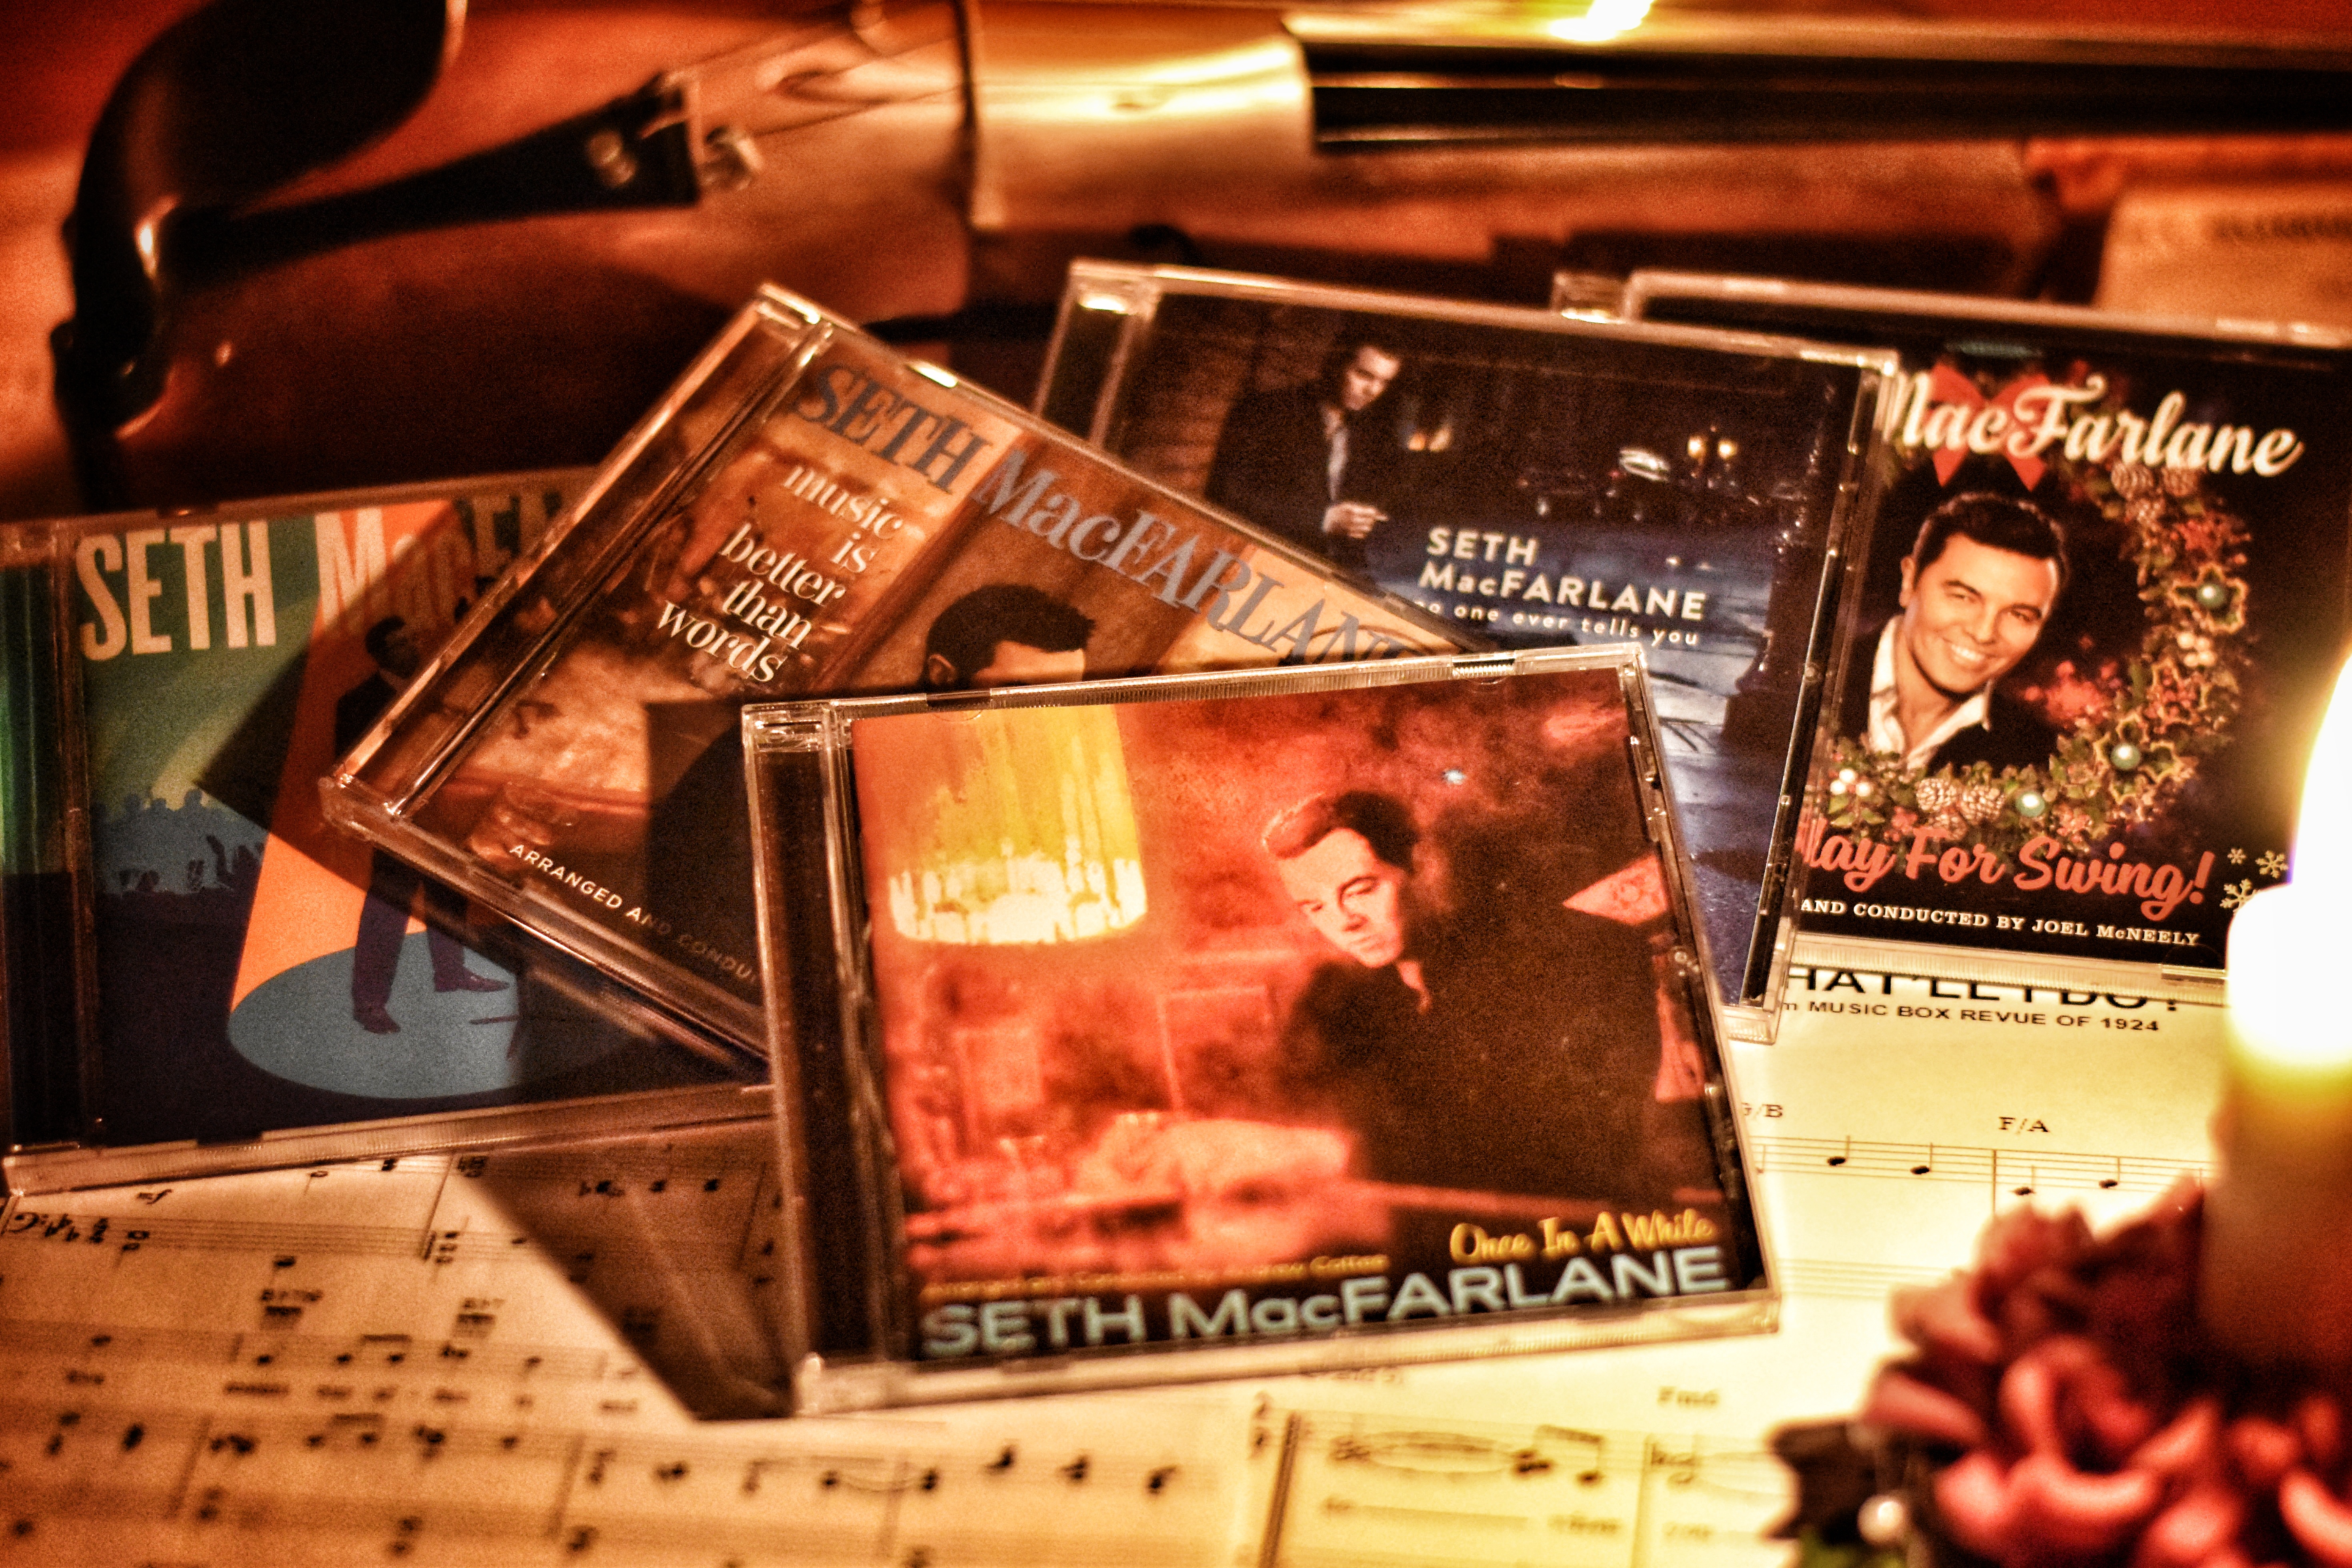 Seth MacFarlane CDs